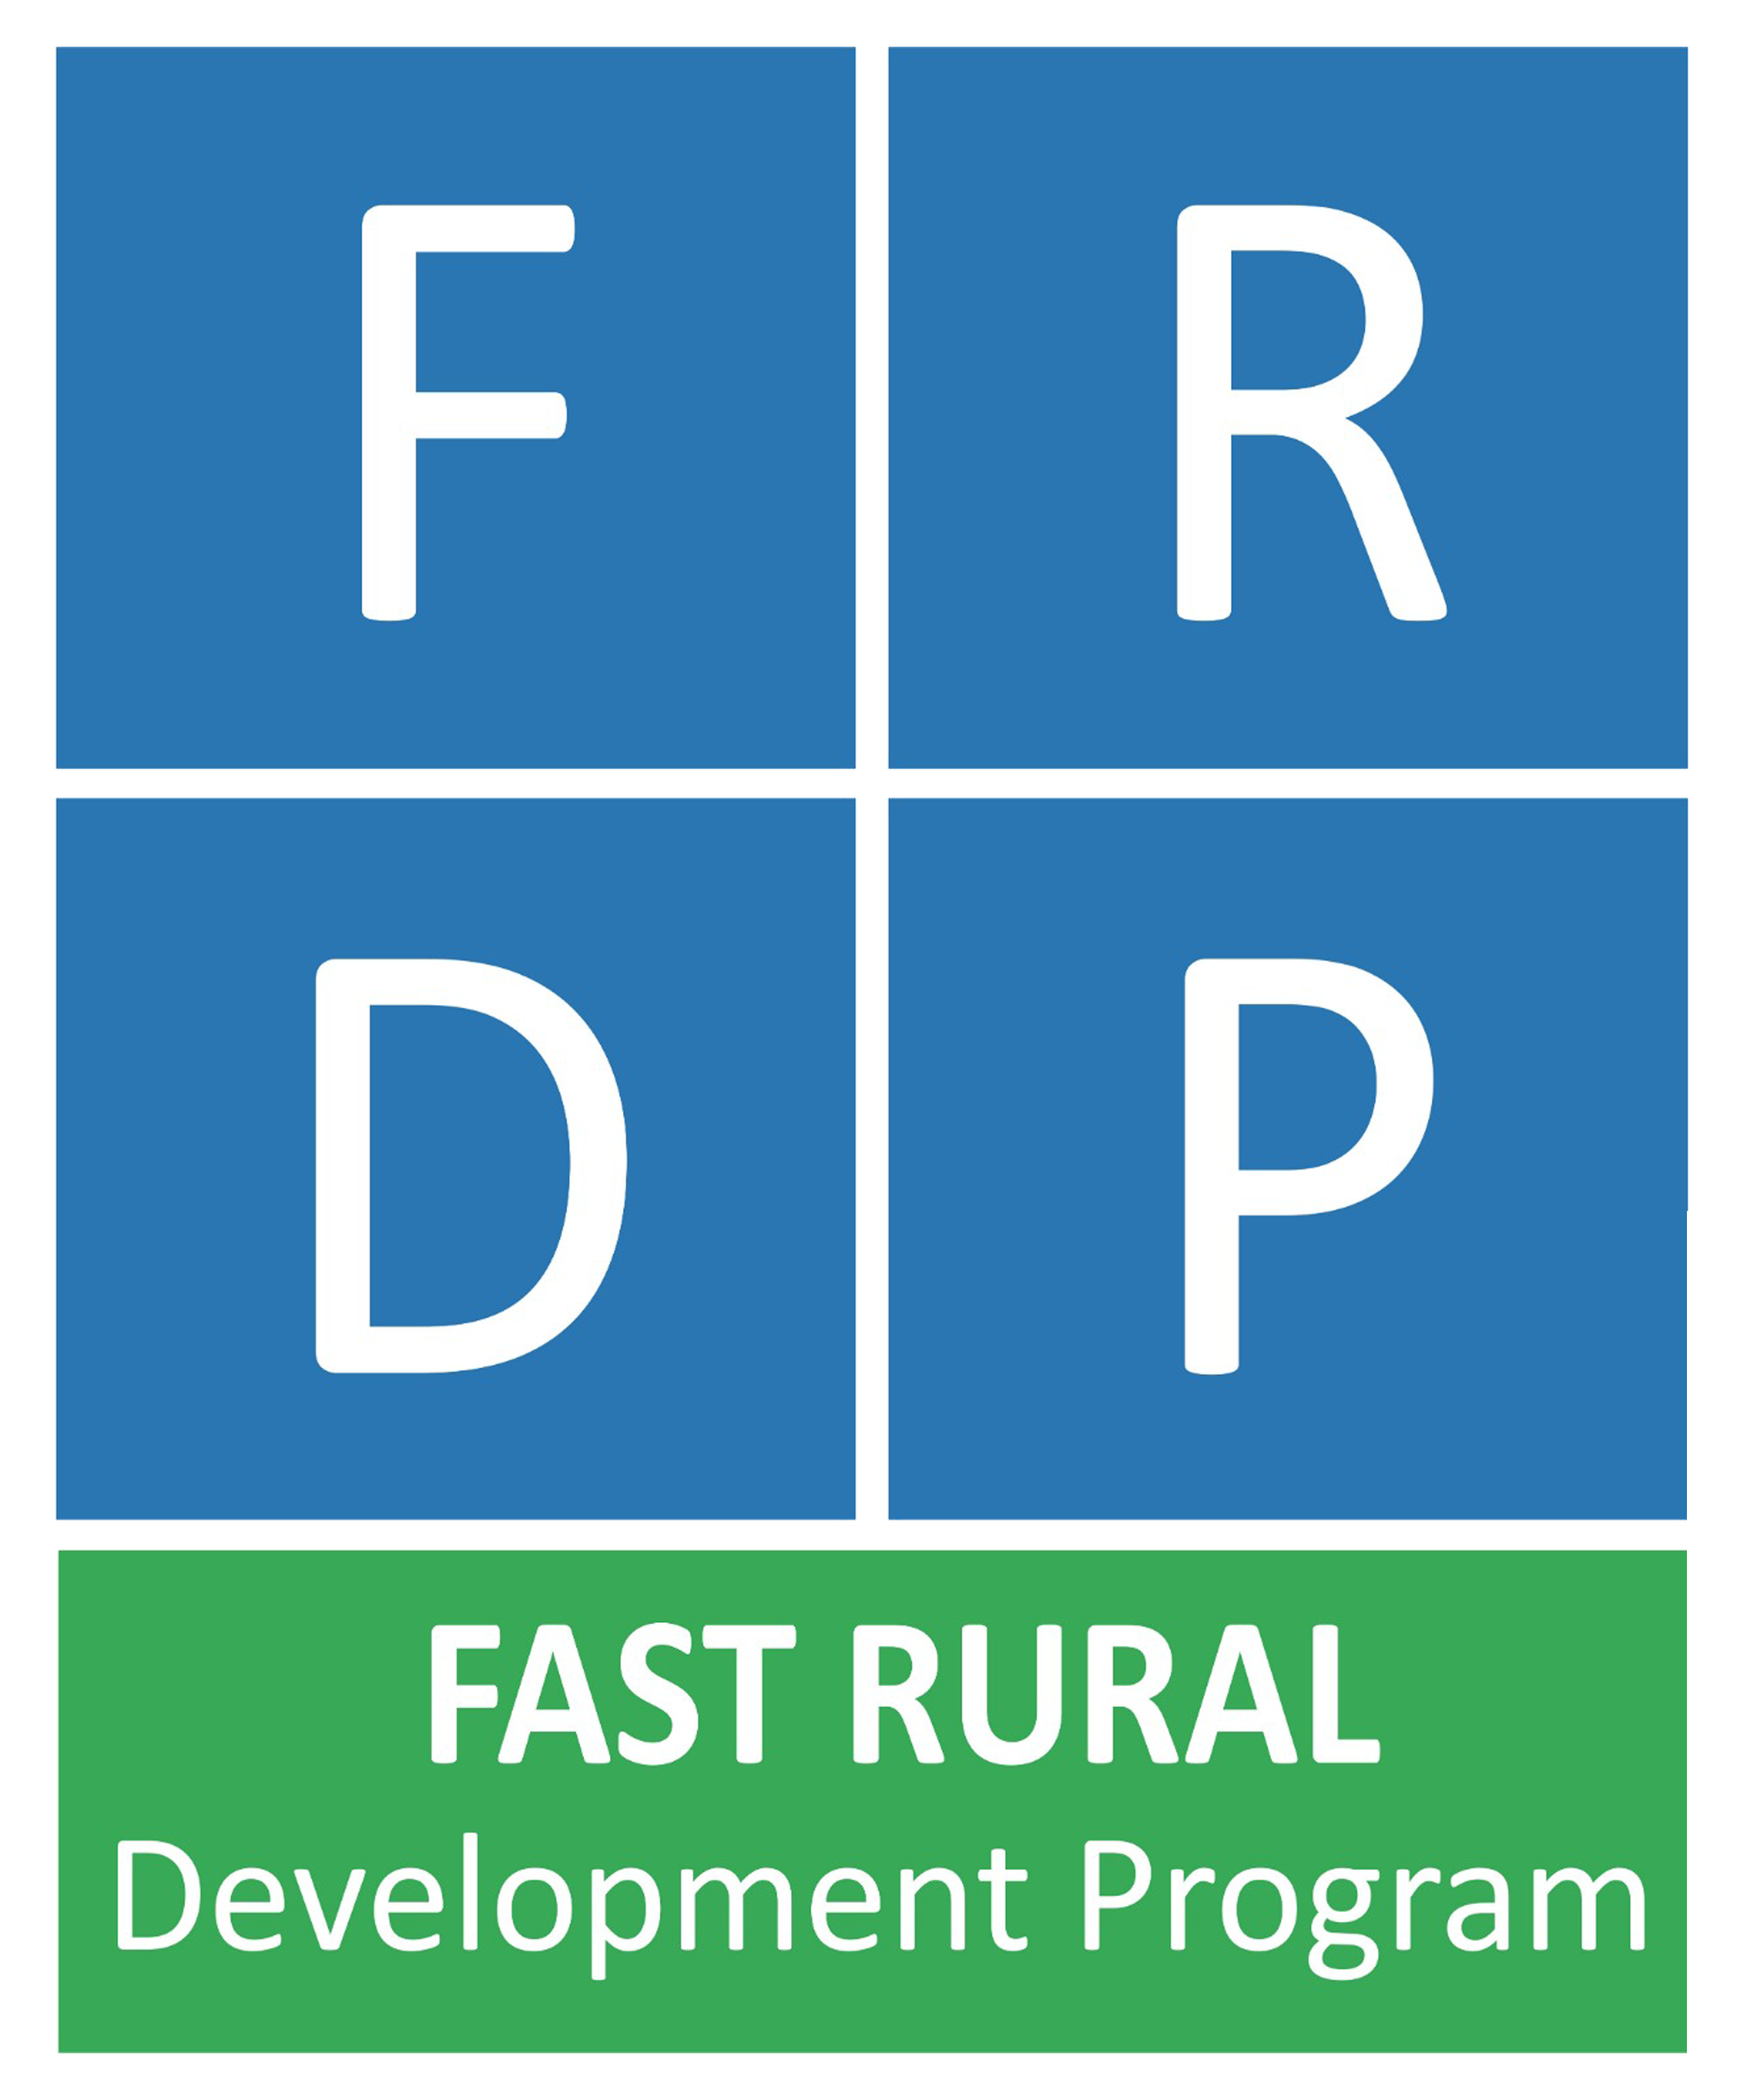 Fast Rural Development Program | FRDP Nonprofit Organization in Pakistan Help People. Donate Now